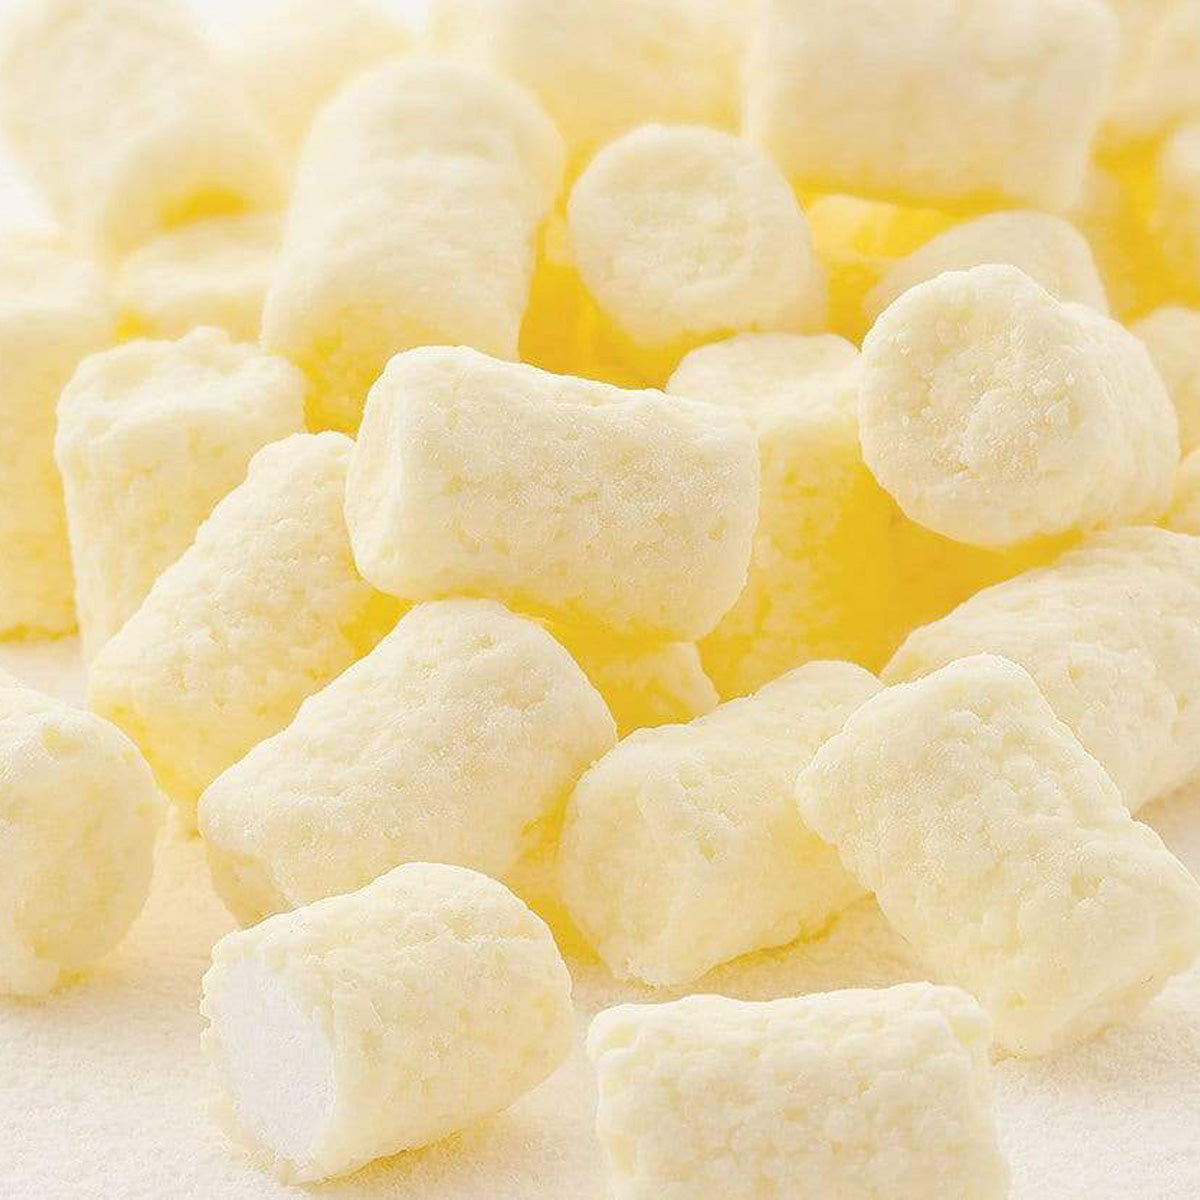 ROYCE' Chocolate - Marshmallow Chocolate "White" - Image shows white chocolate-coated marshmallows.